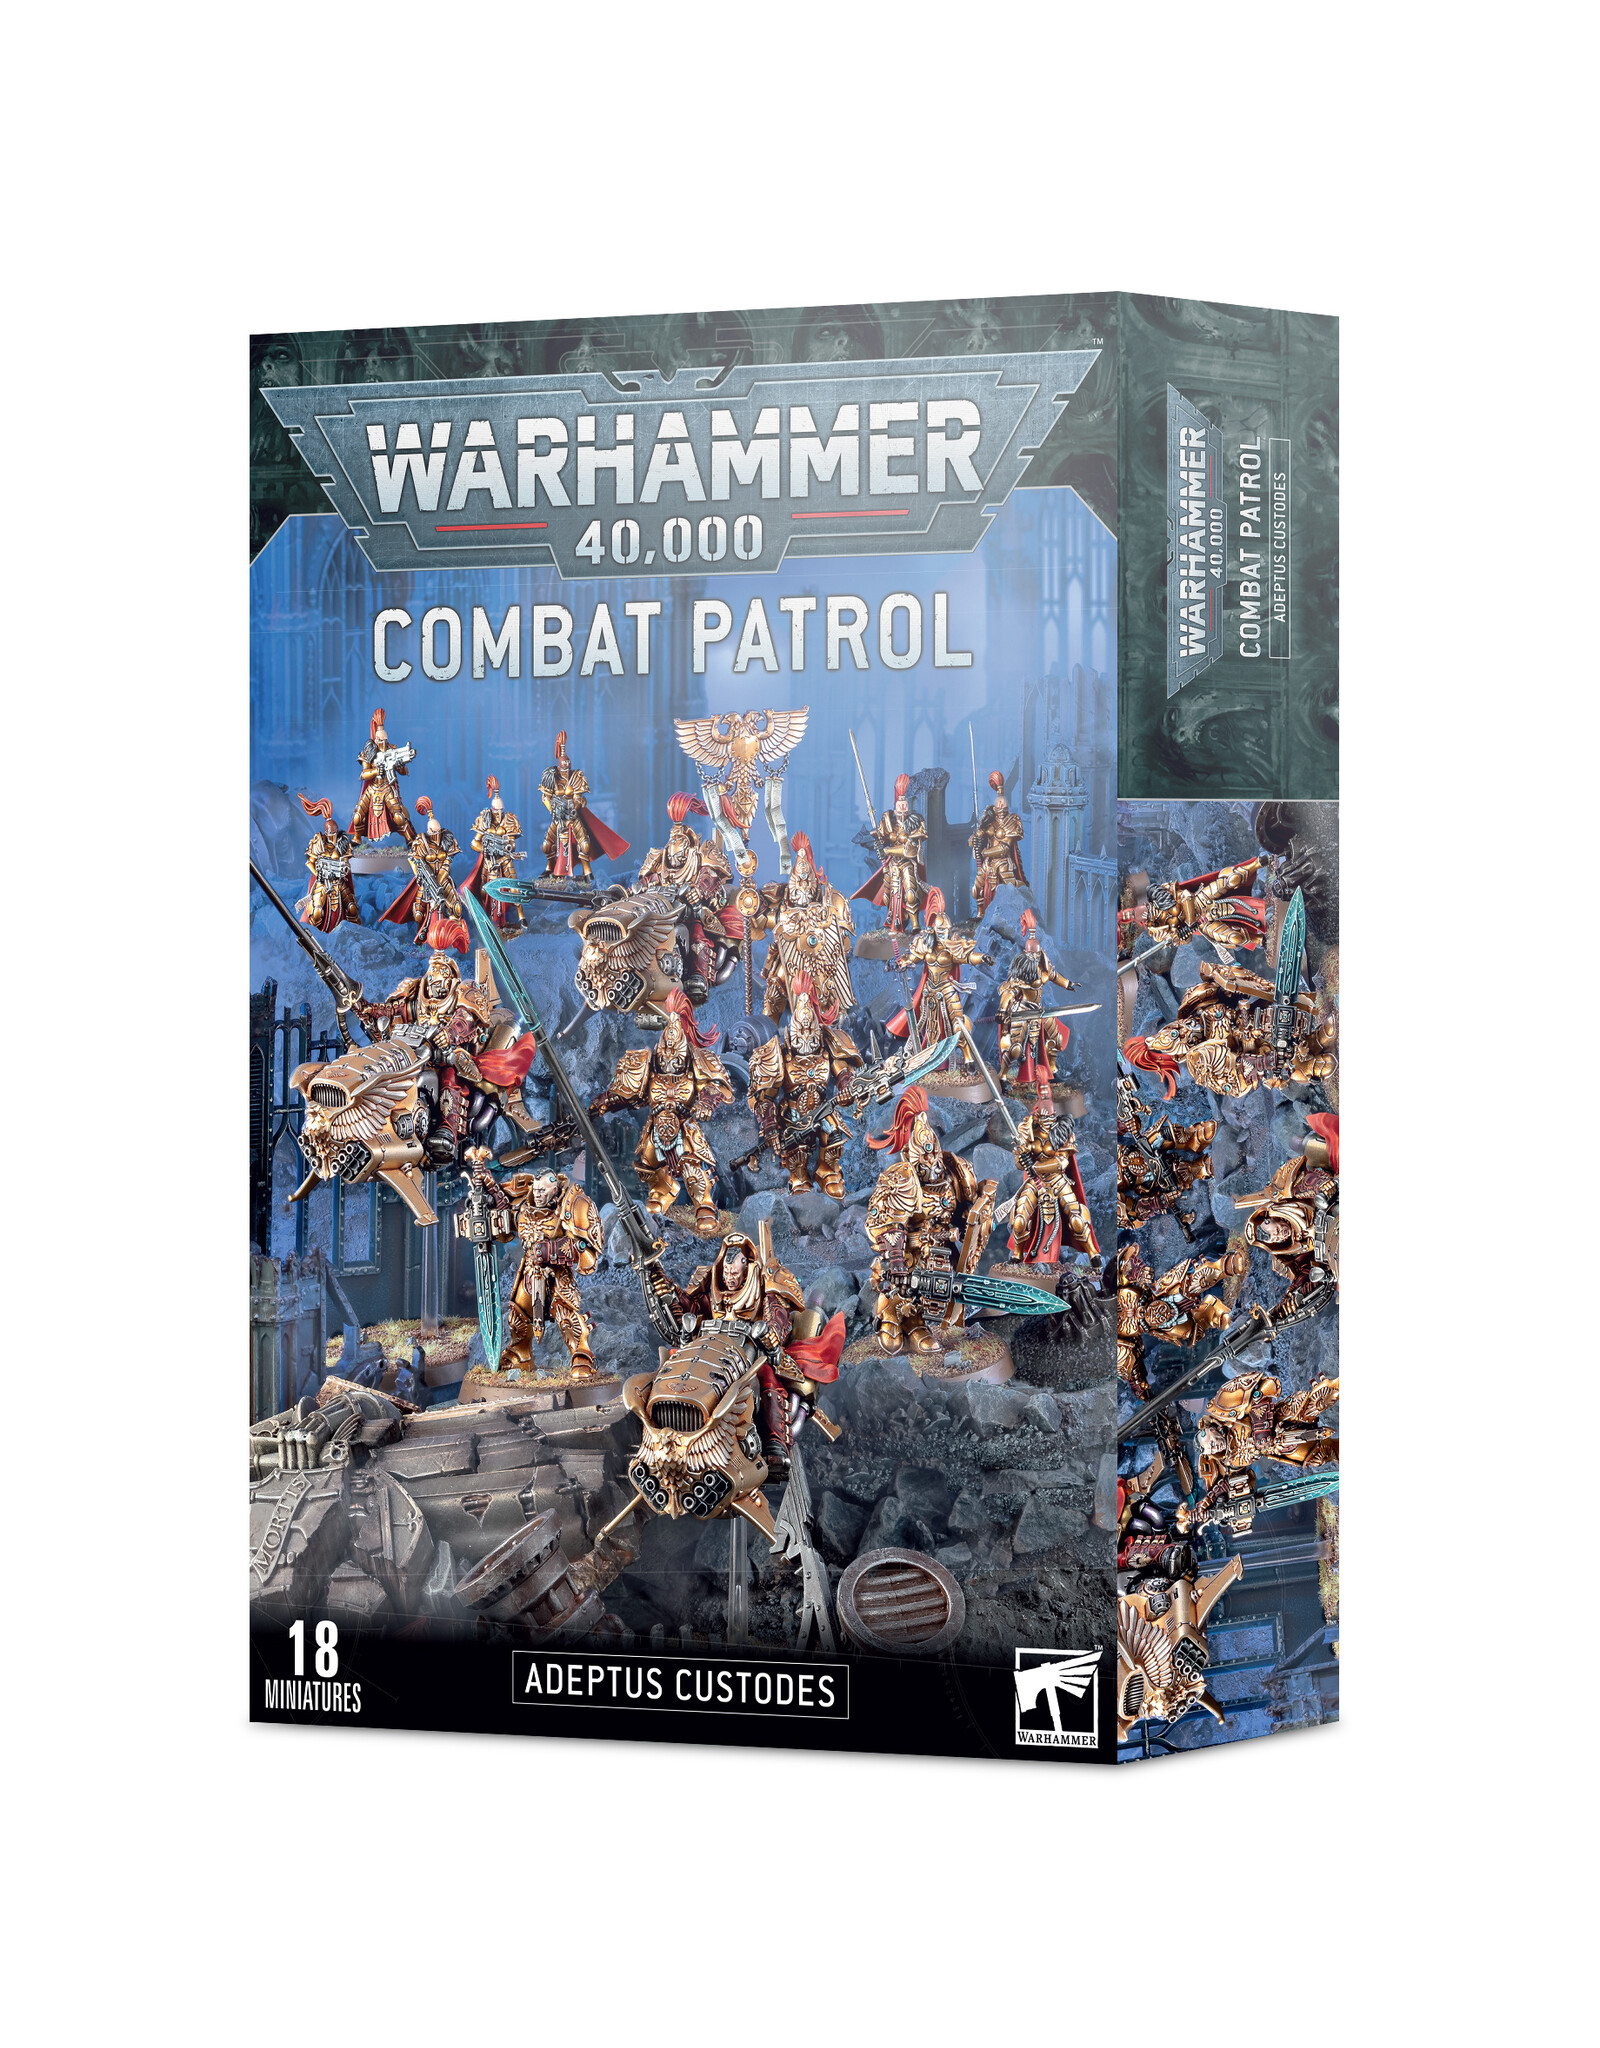 Warhammer 40K Combat Patrol: Adeptus Custodes